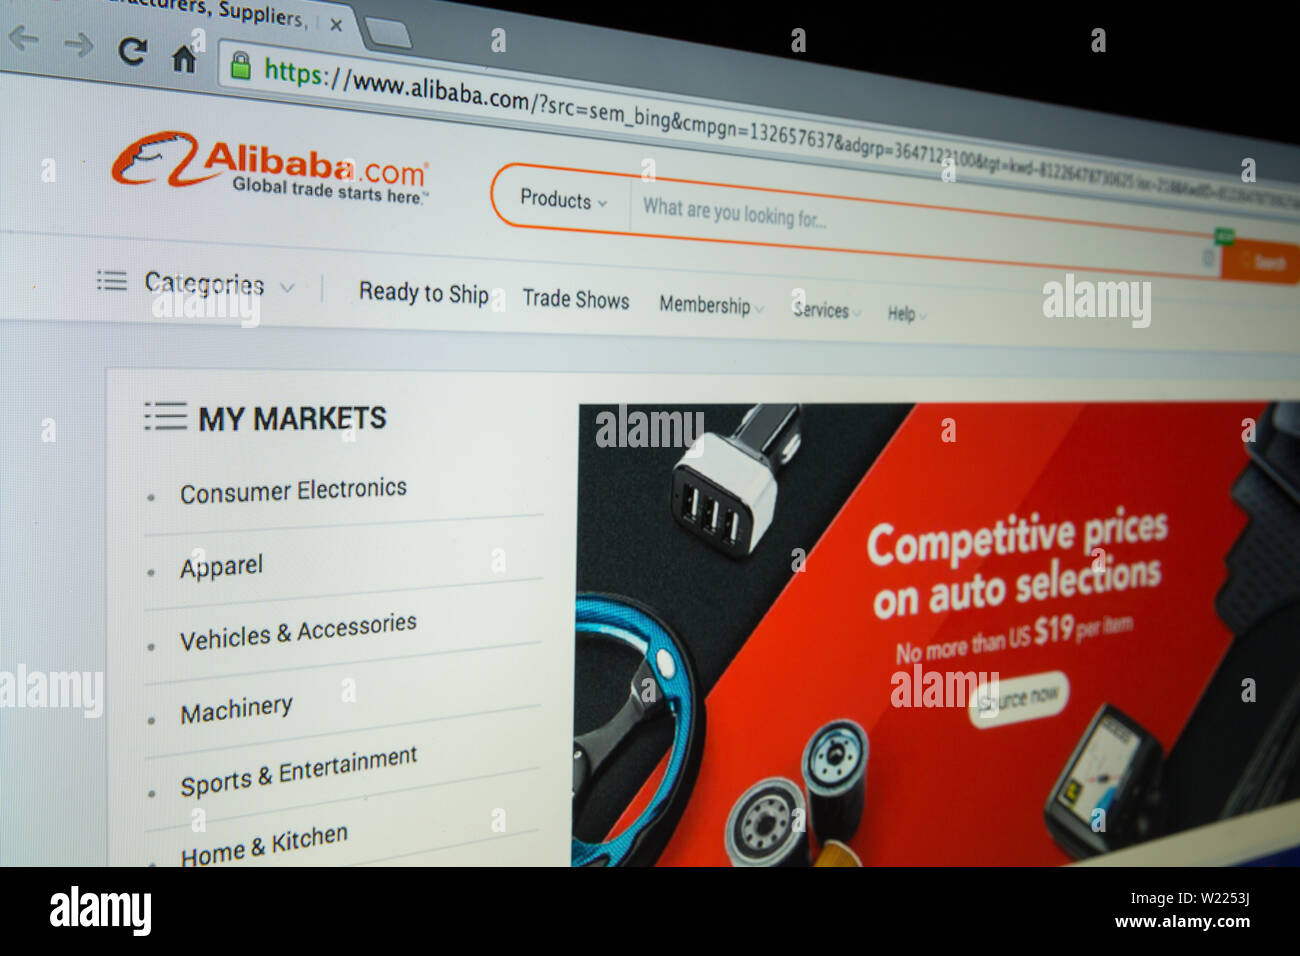 alibaba website Stock Photo